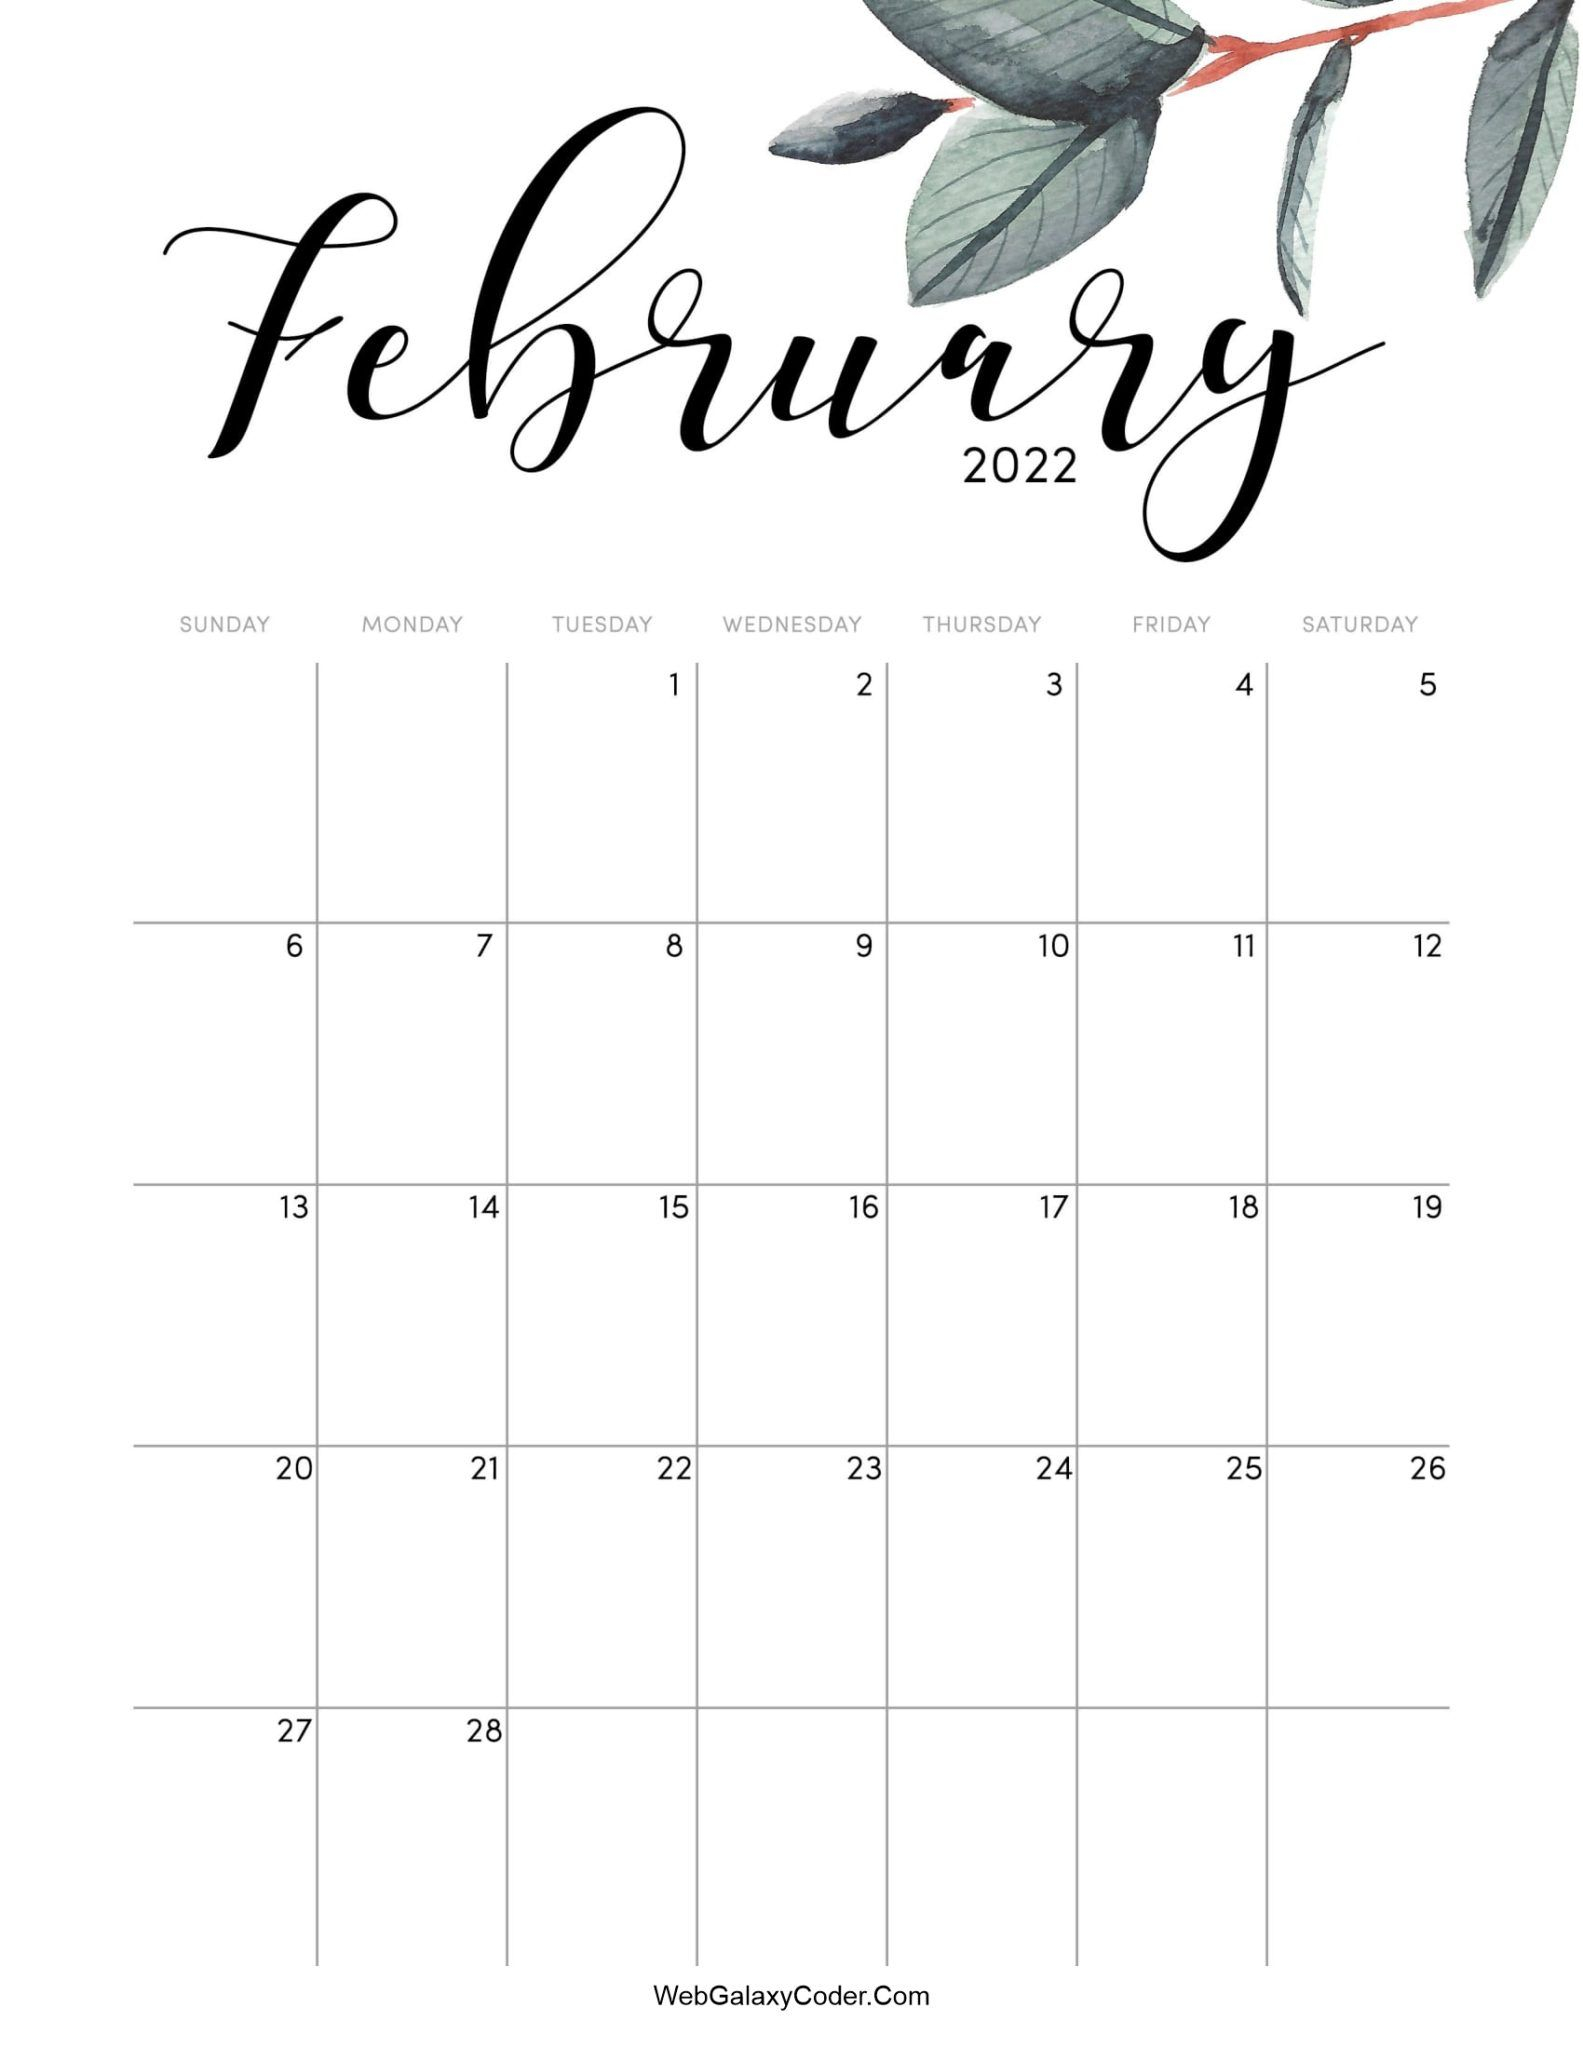 February 2022 Calendar - Cute Format - Print Now